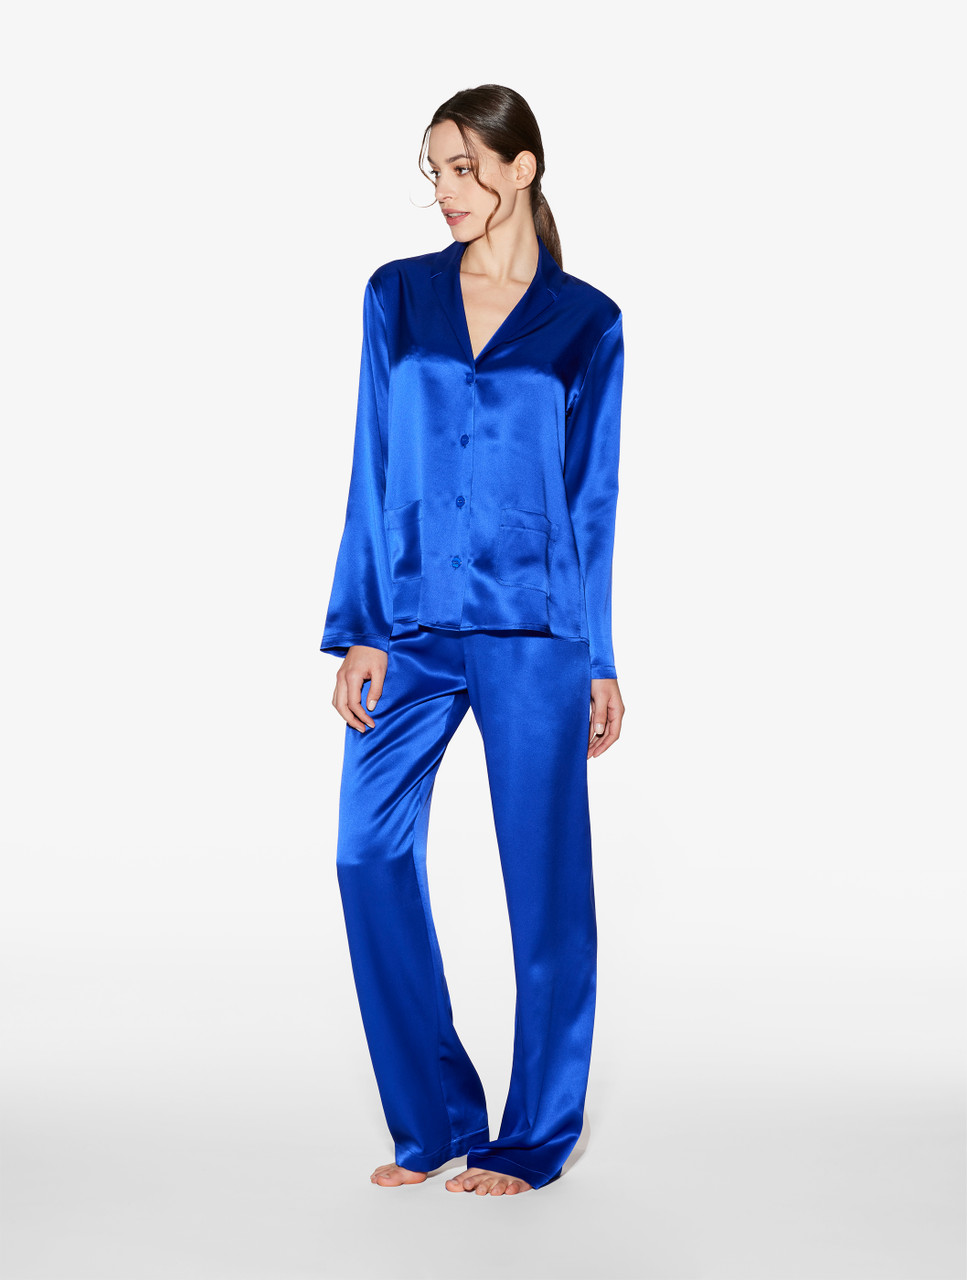 Silk Pajama set in electric blue